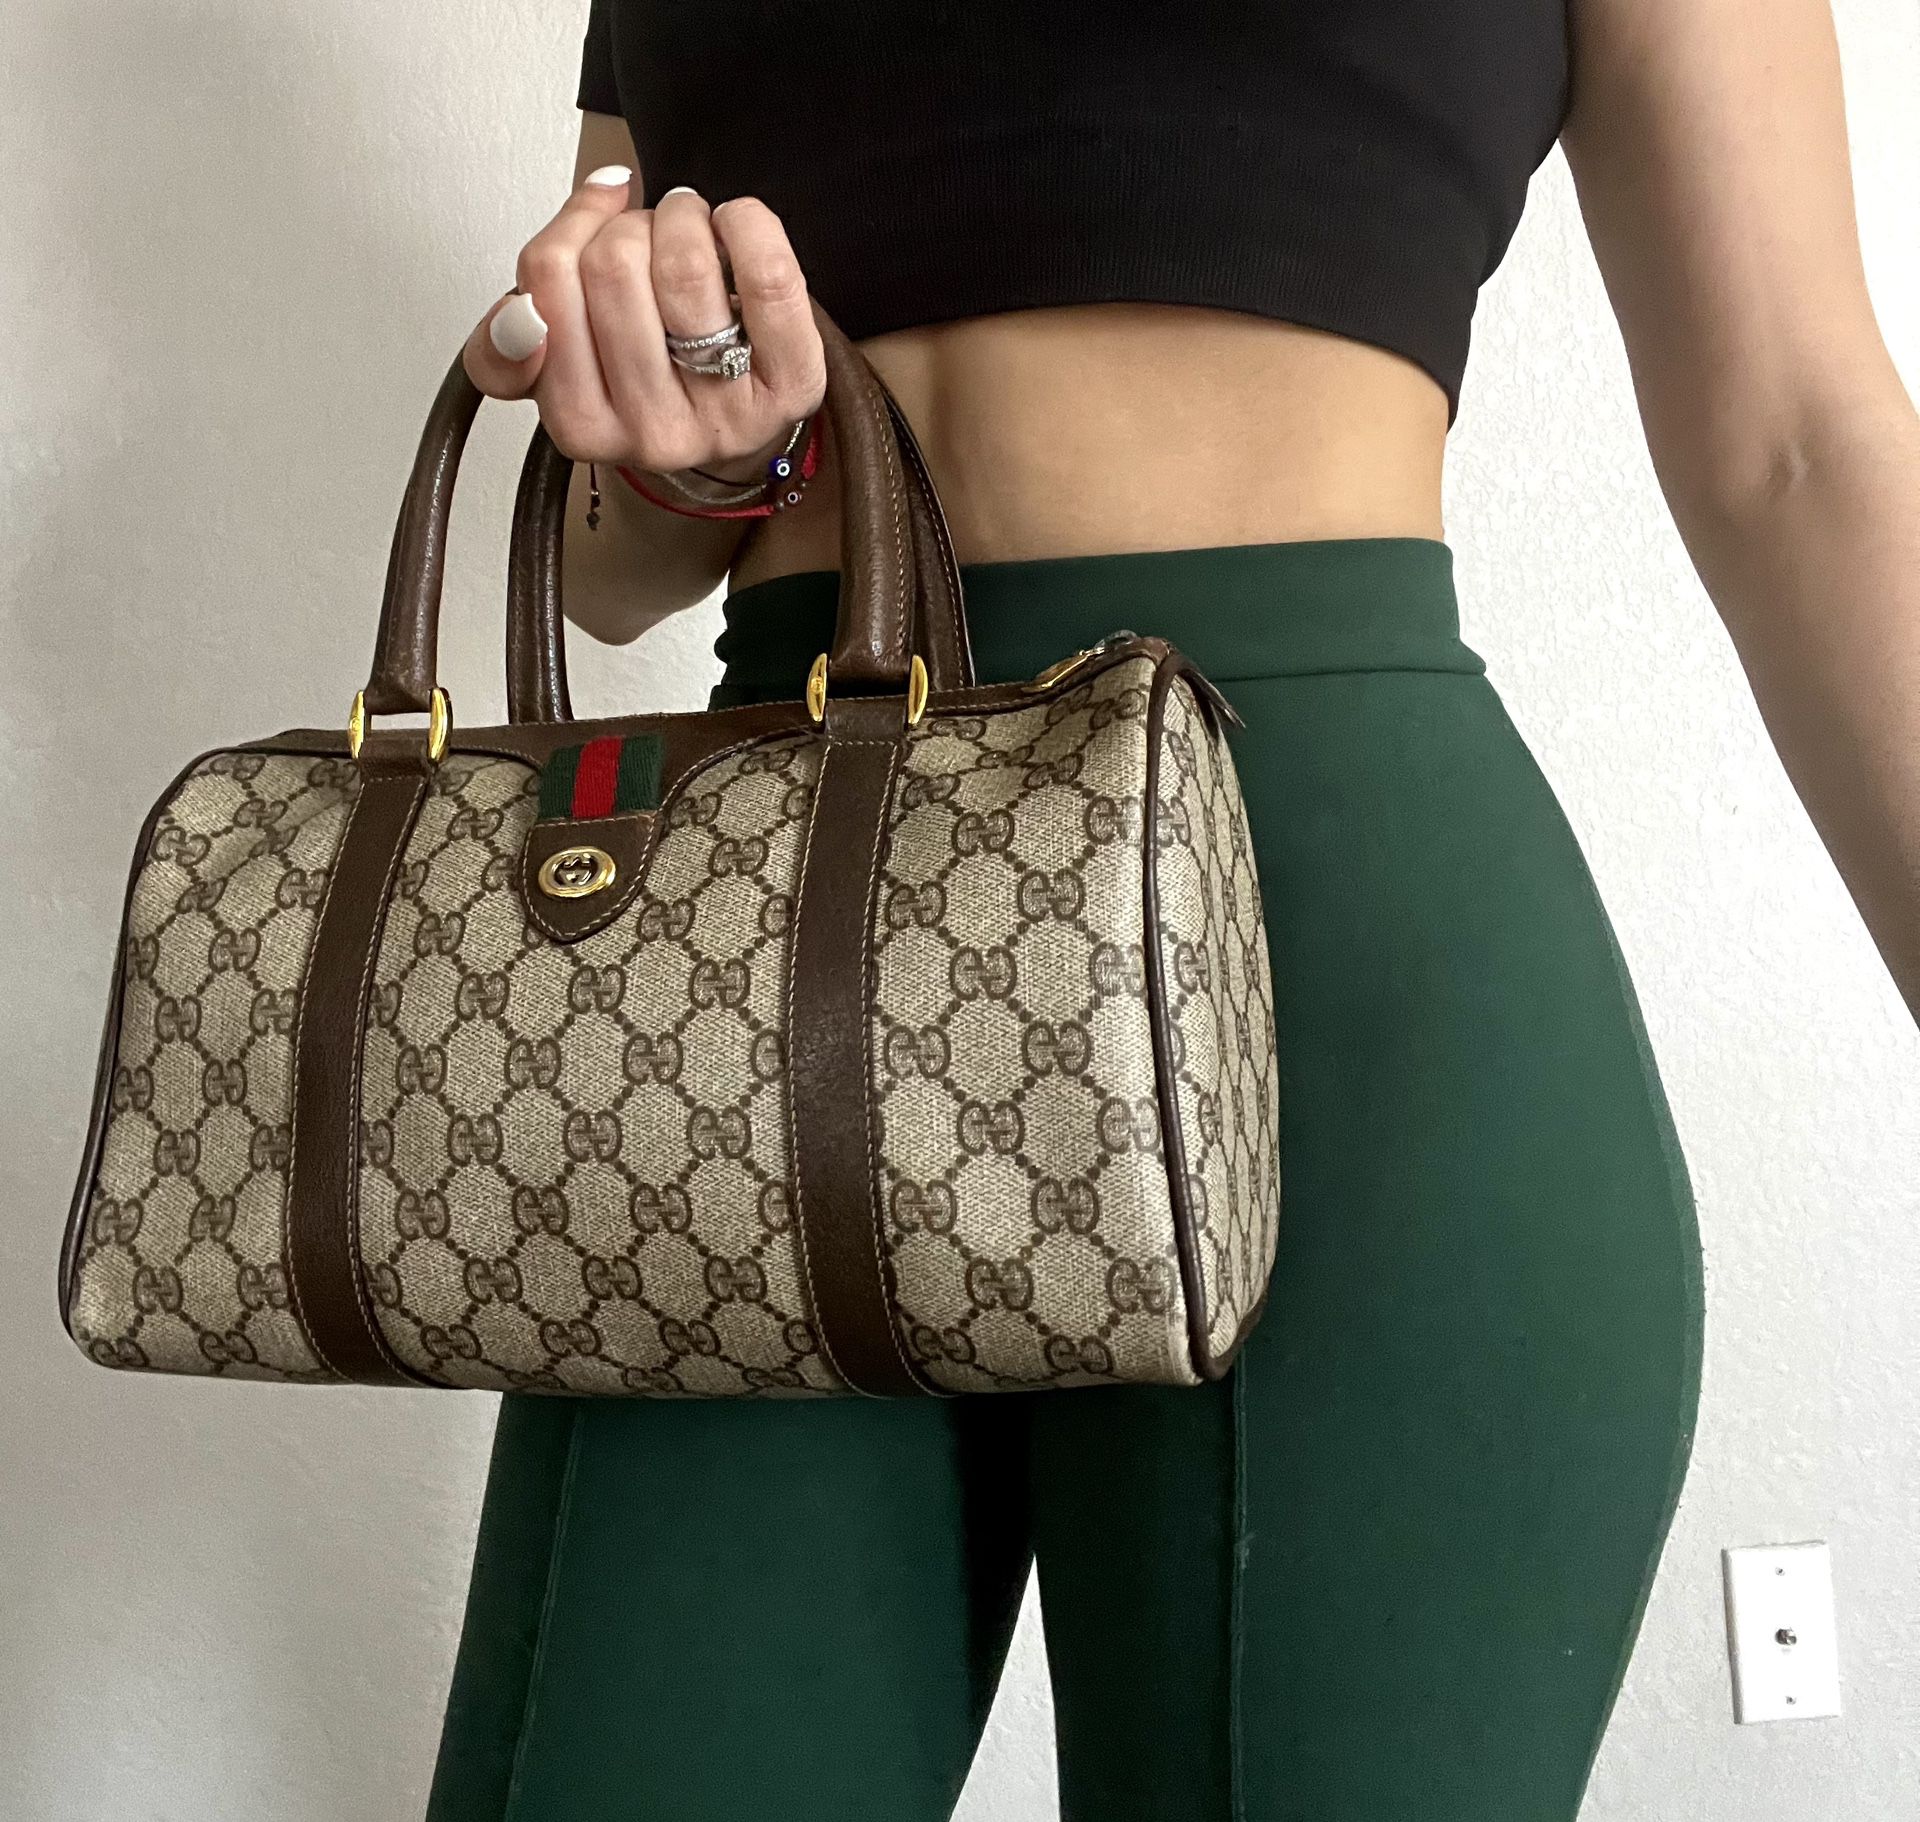 Authentic Gucci Boston Bag for Sale in Surprise, AZ - OfferUp